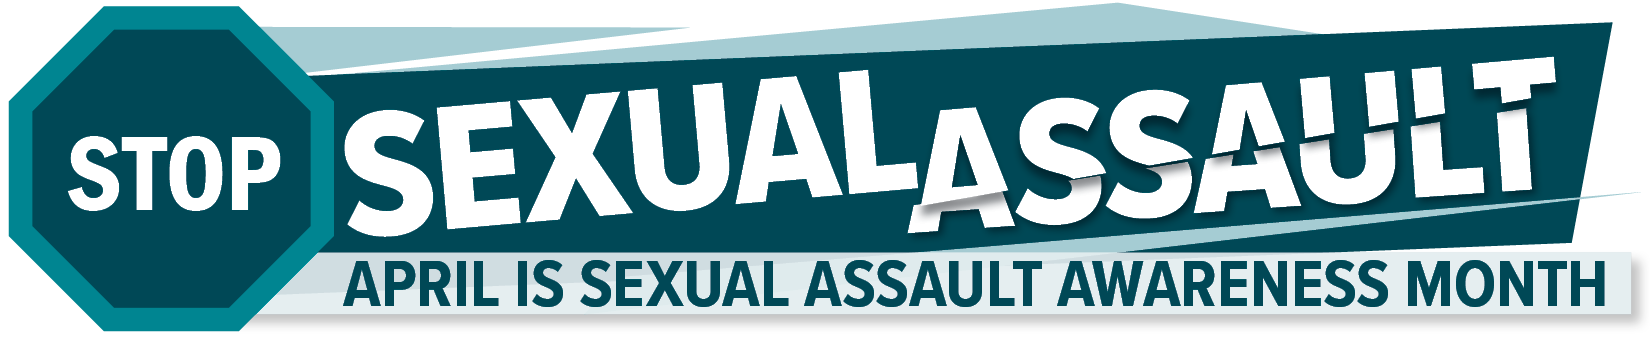 April is Sexual Assault Awareness Month Banner